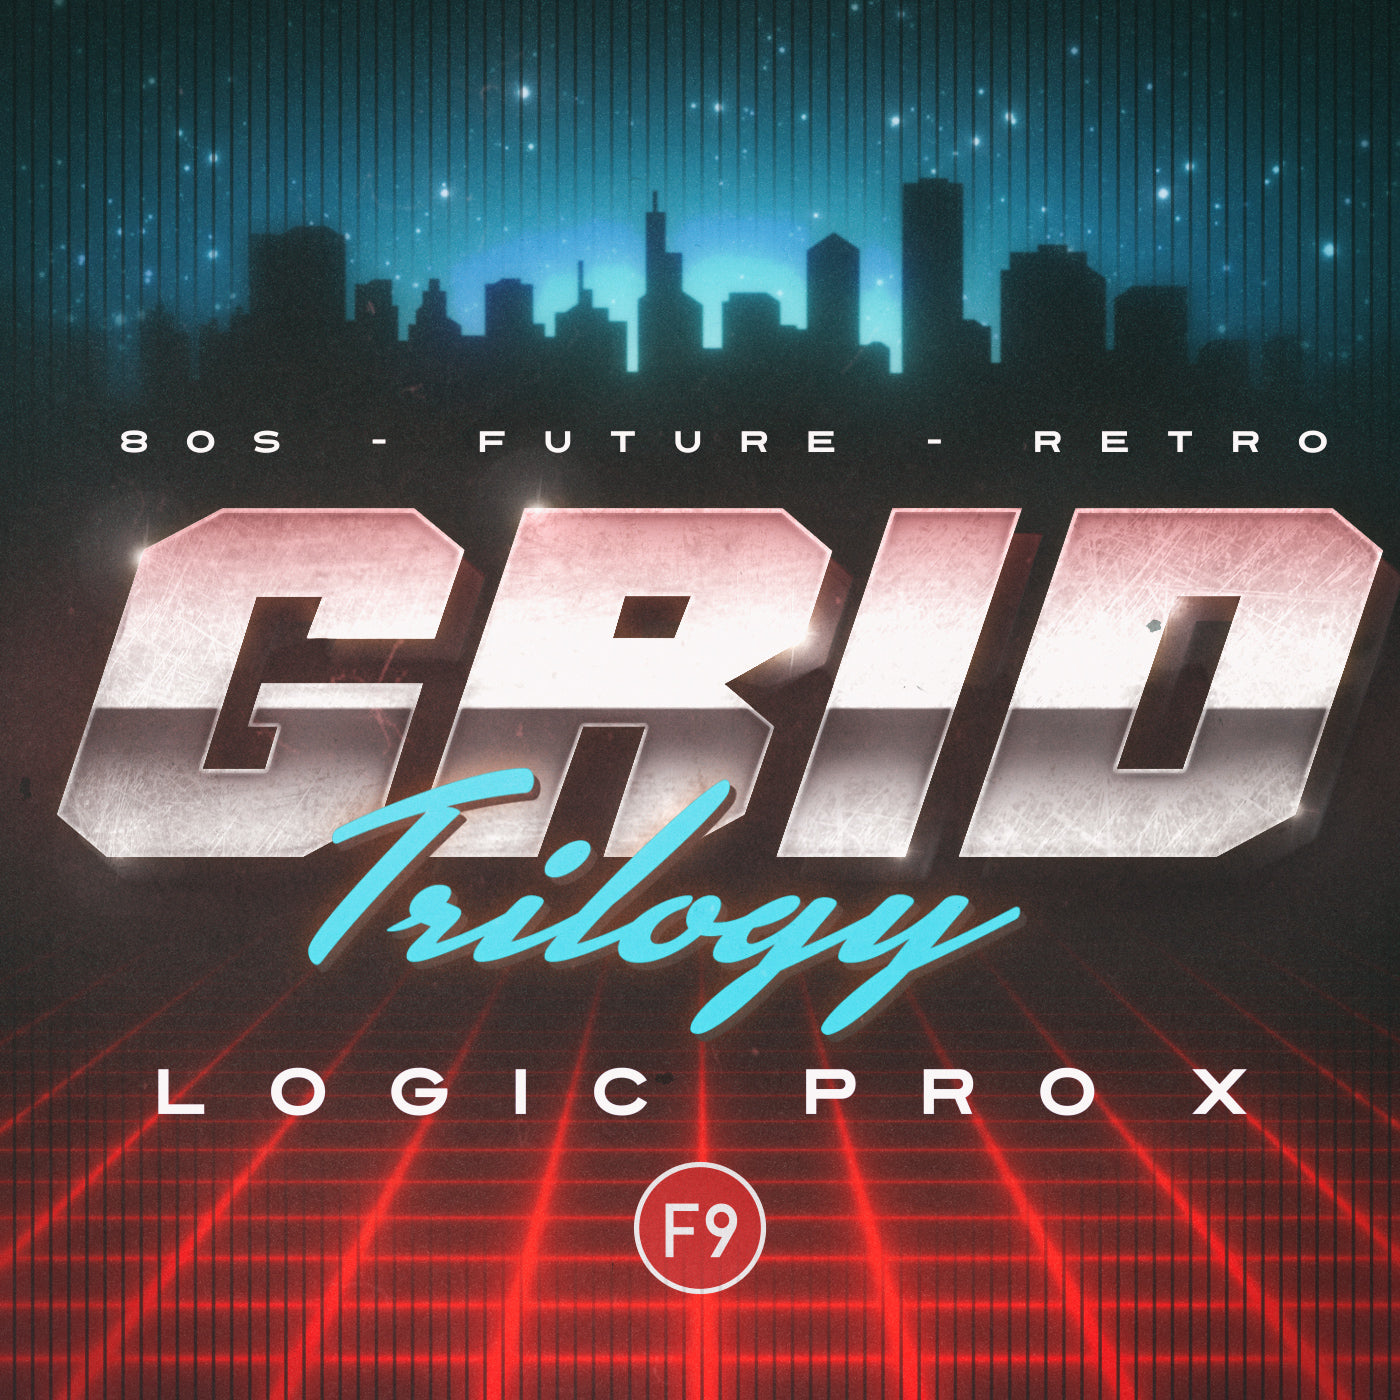 F9 Grid Trilogy 80s Future Retro - For Logic Pro X - F9 Audio Royalty Free loops & Wav Samples